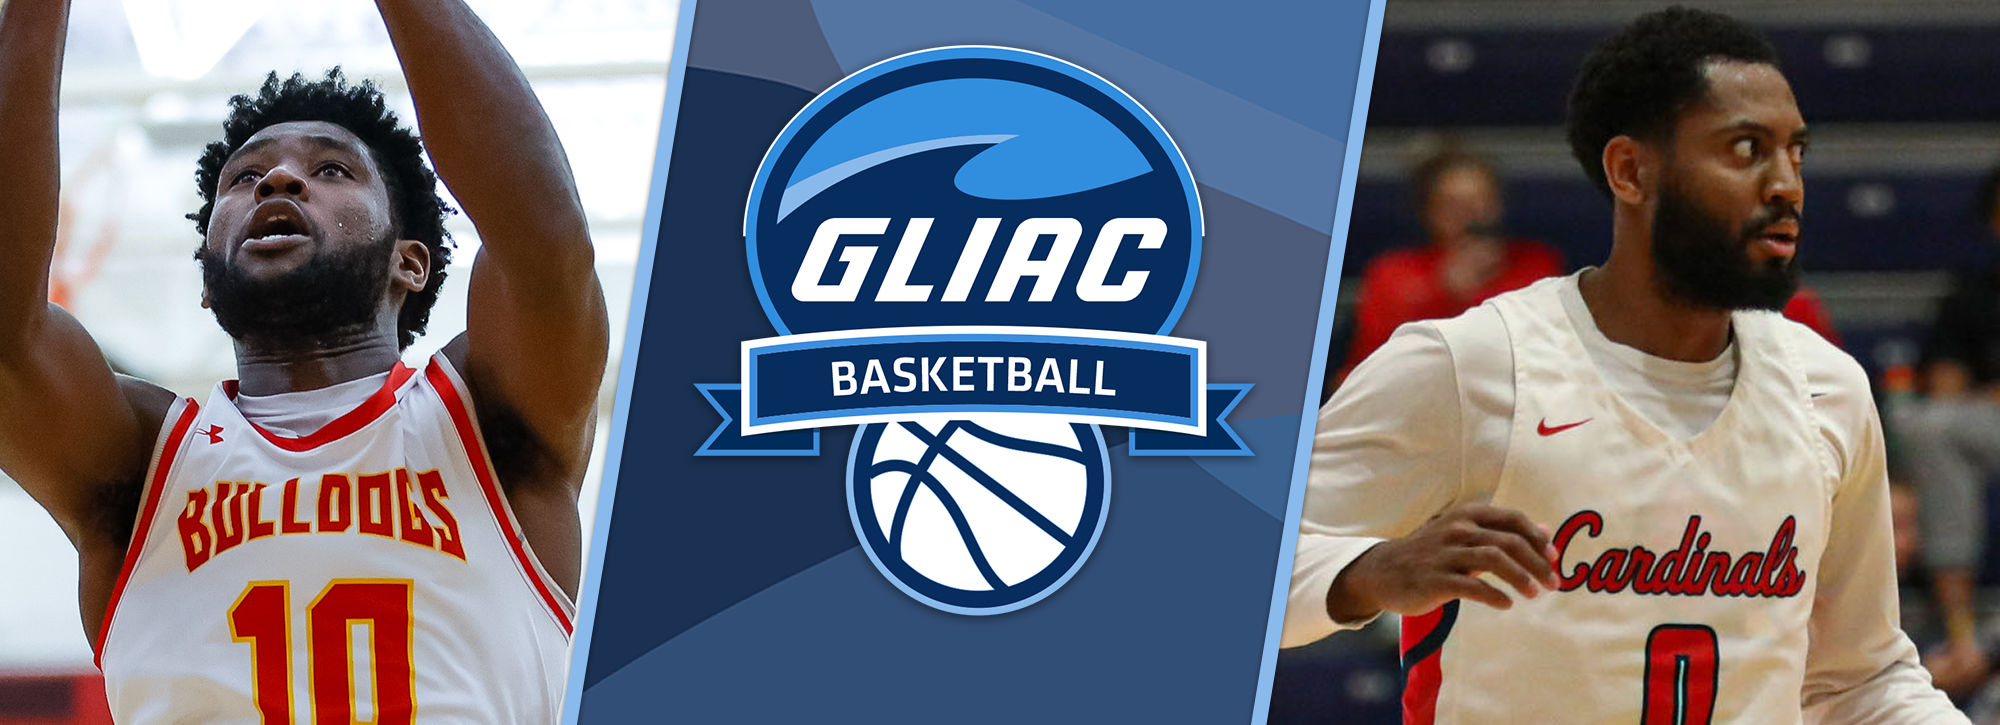 FSU's Aluyi and SVSU's Hoskins named GLIAC Men's Basketball Players of the Week